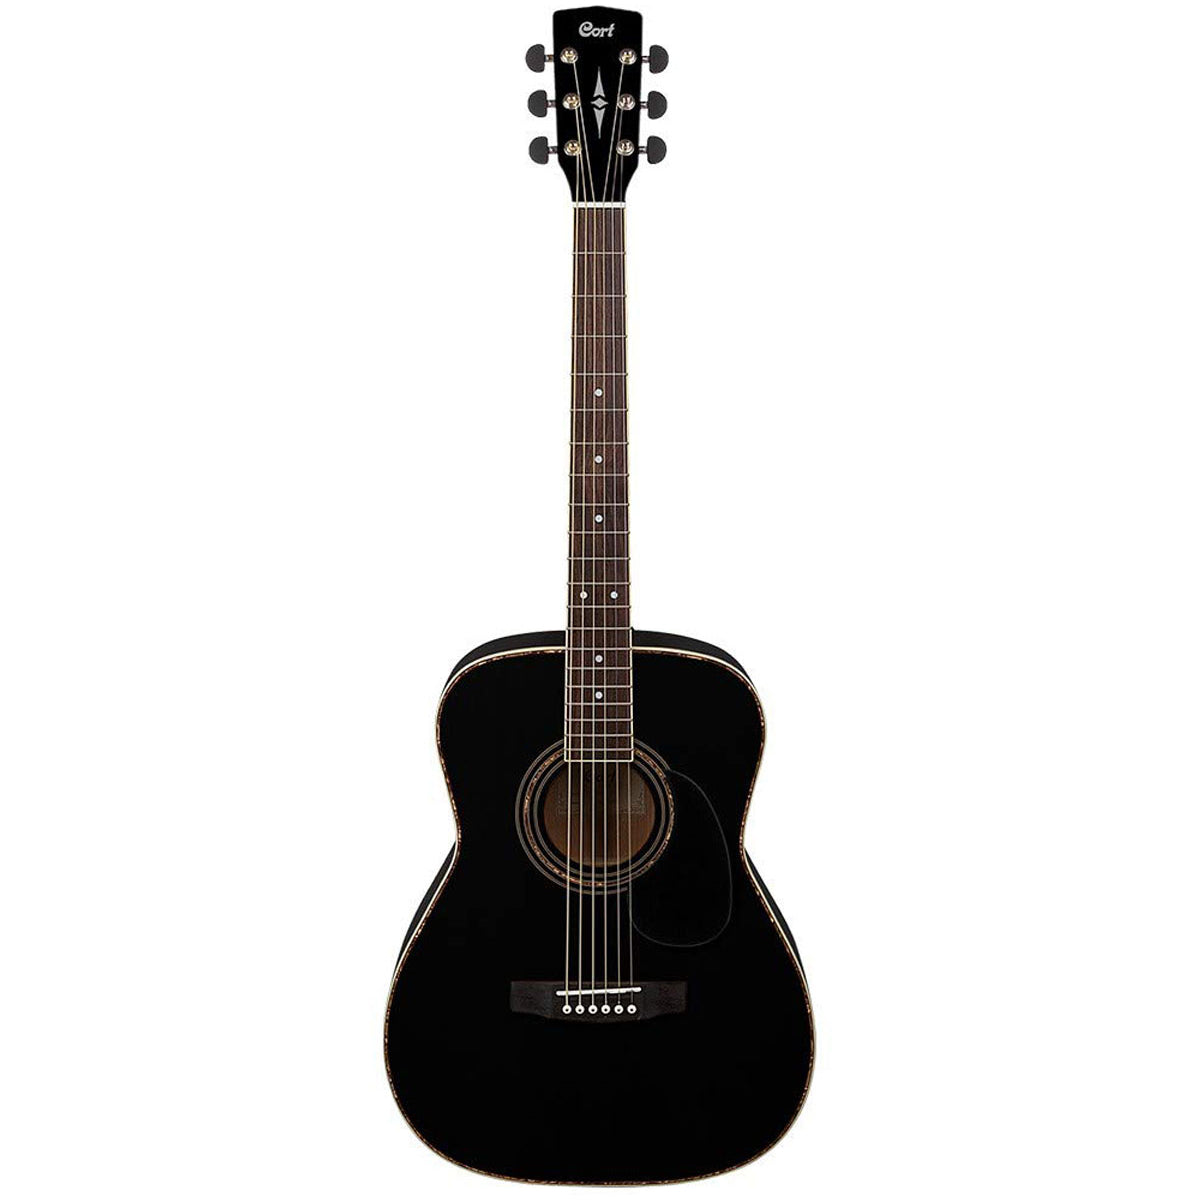 Cort AD880 Acoustic Guitar Black